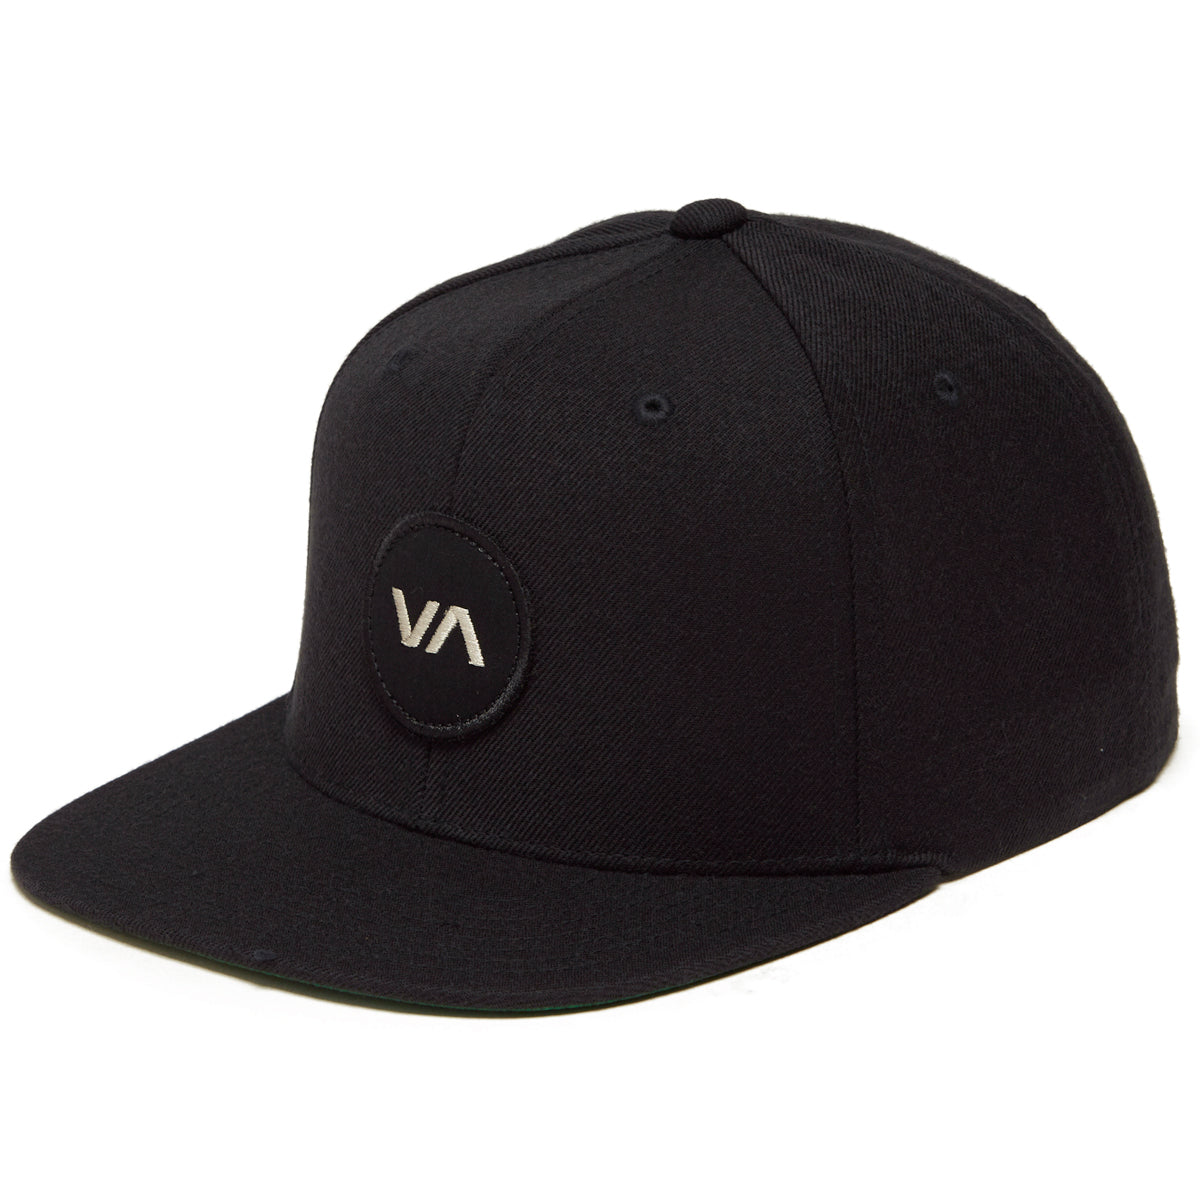 RVCA Va Patch Snapback Hat - Black image 1